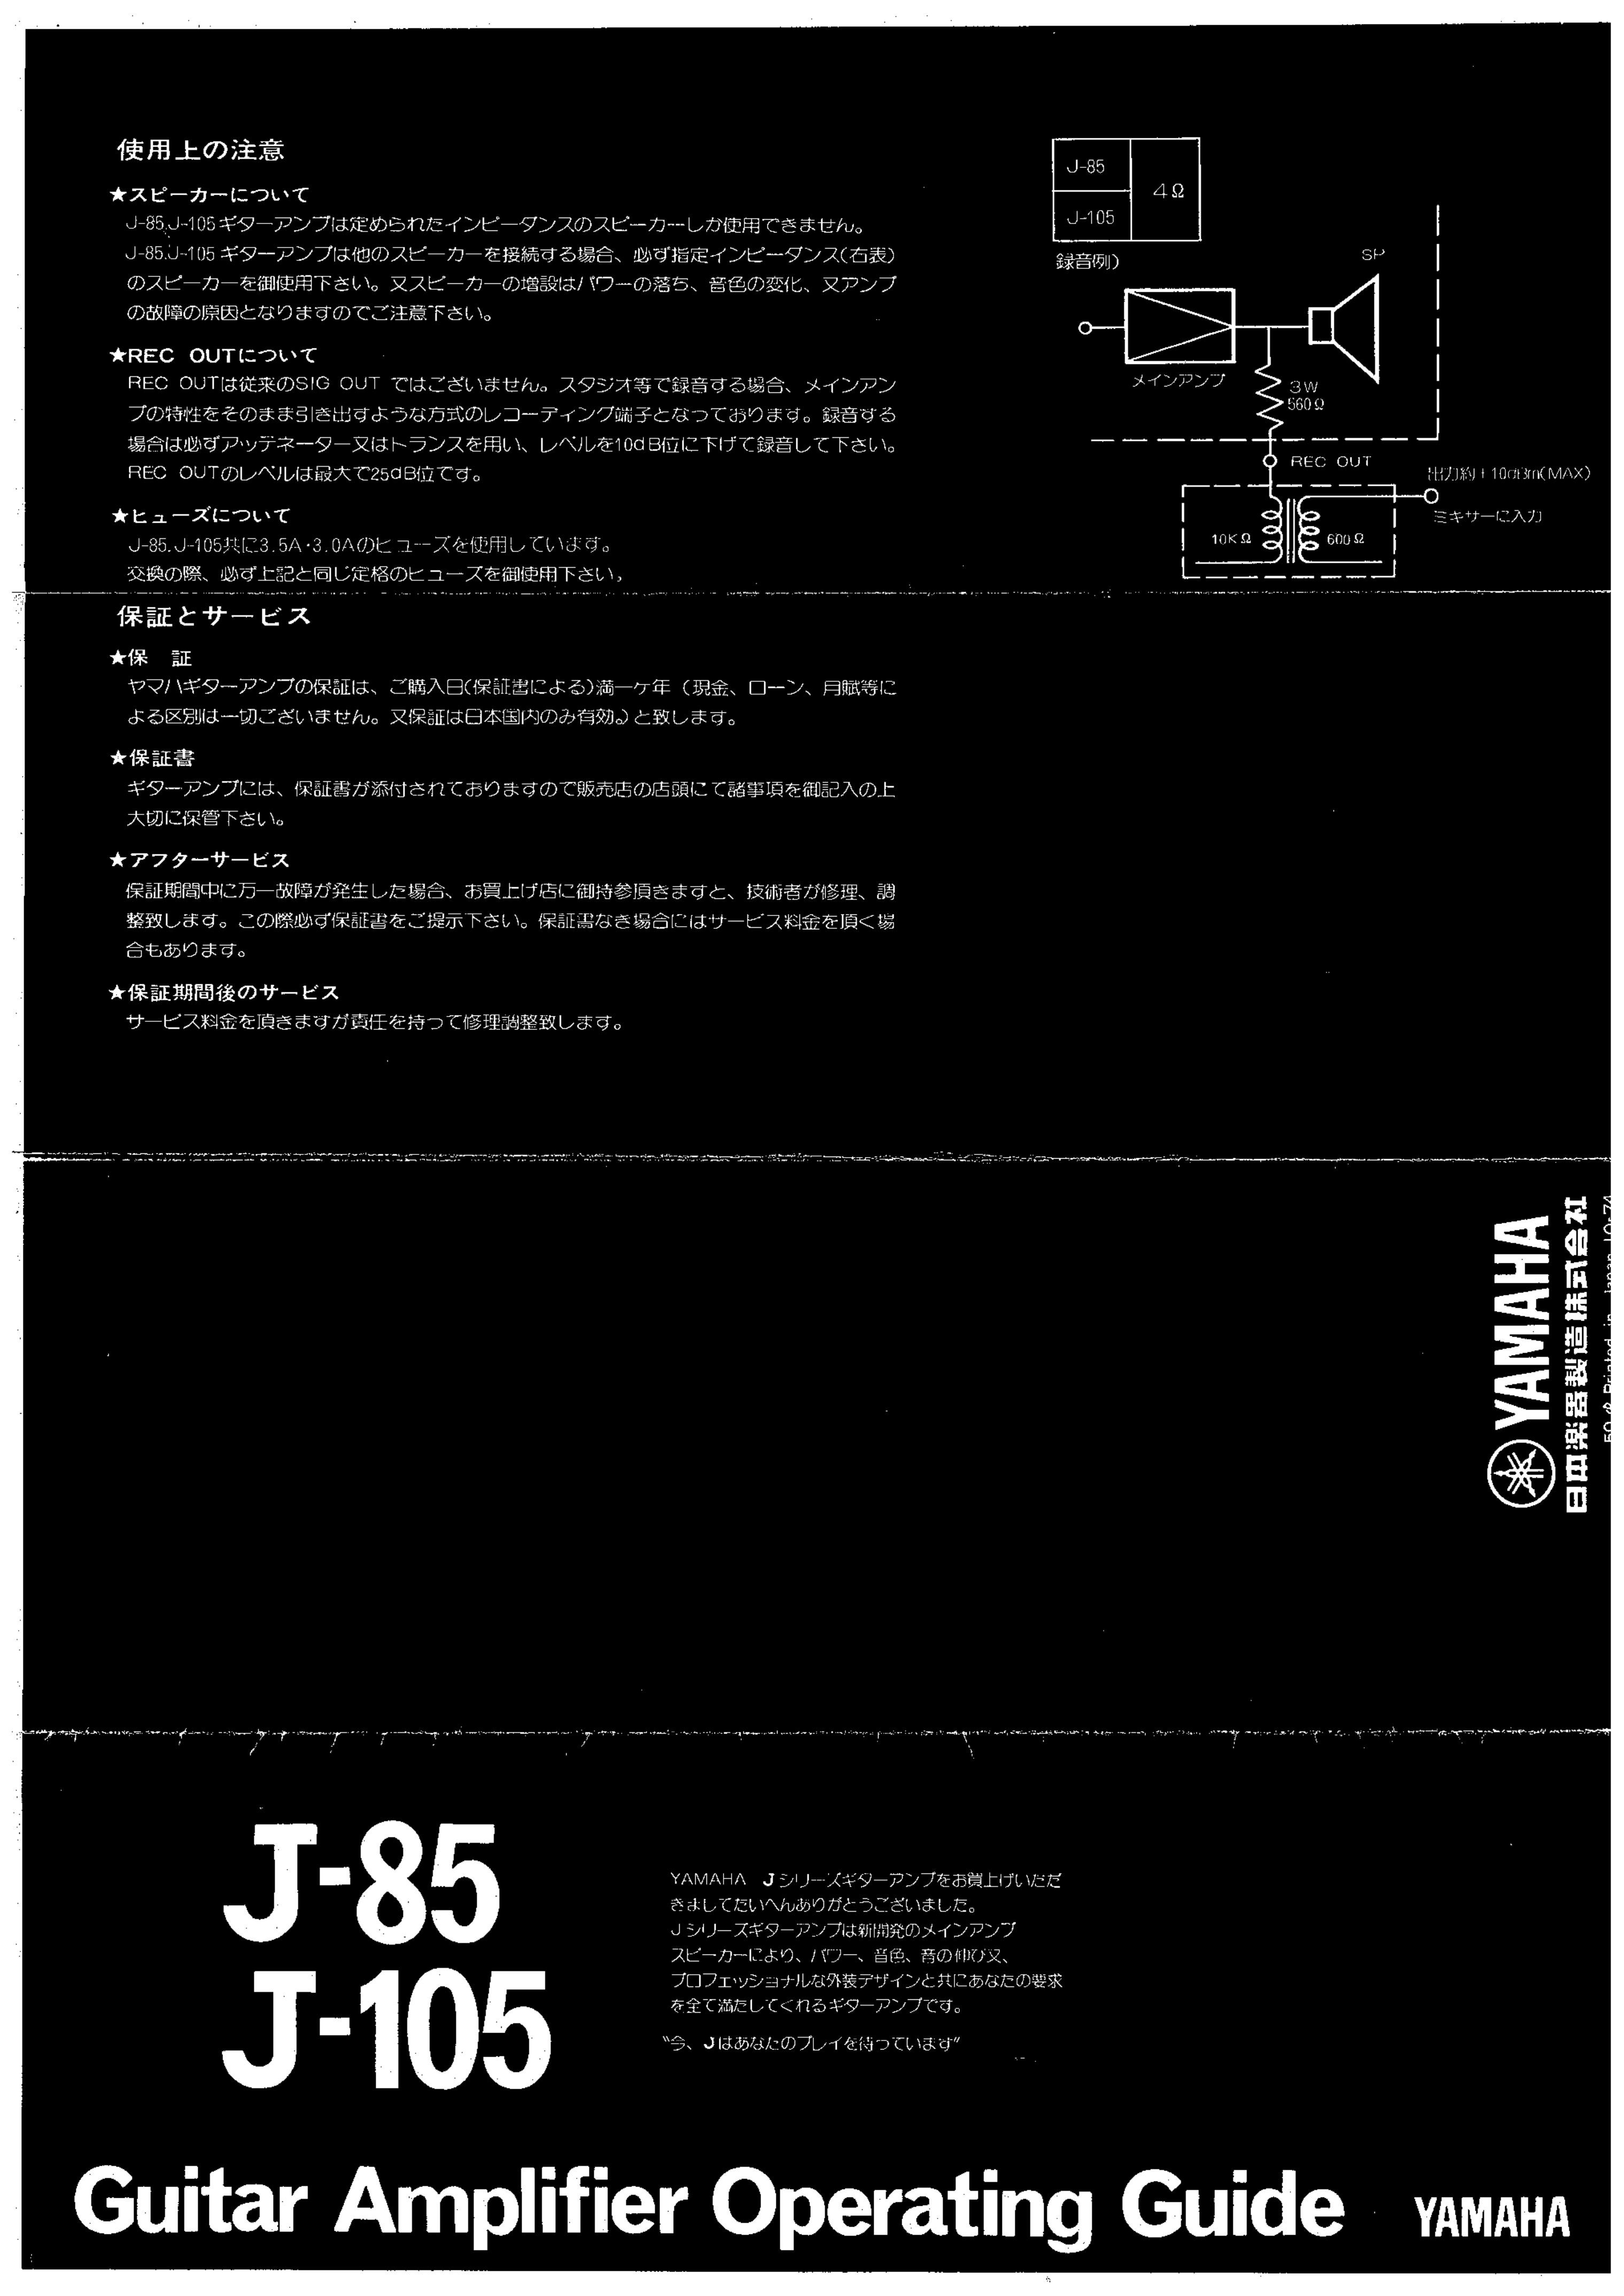 Yamaha J-105 Musical Instrument Amplifier User Manual